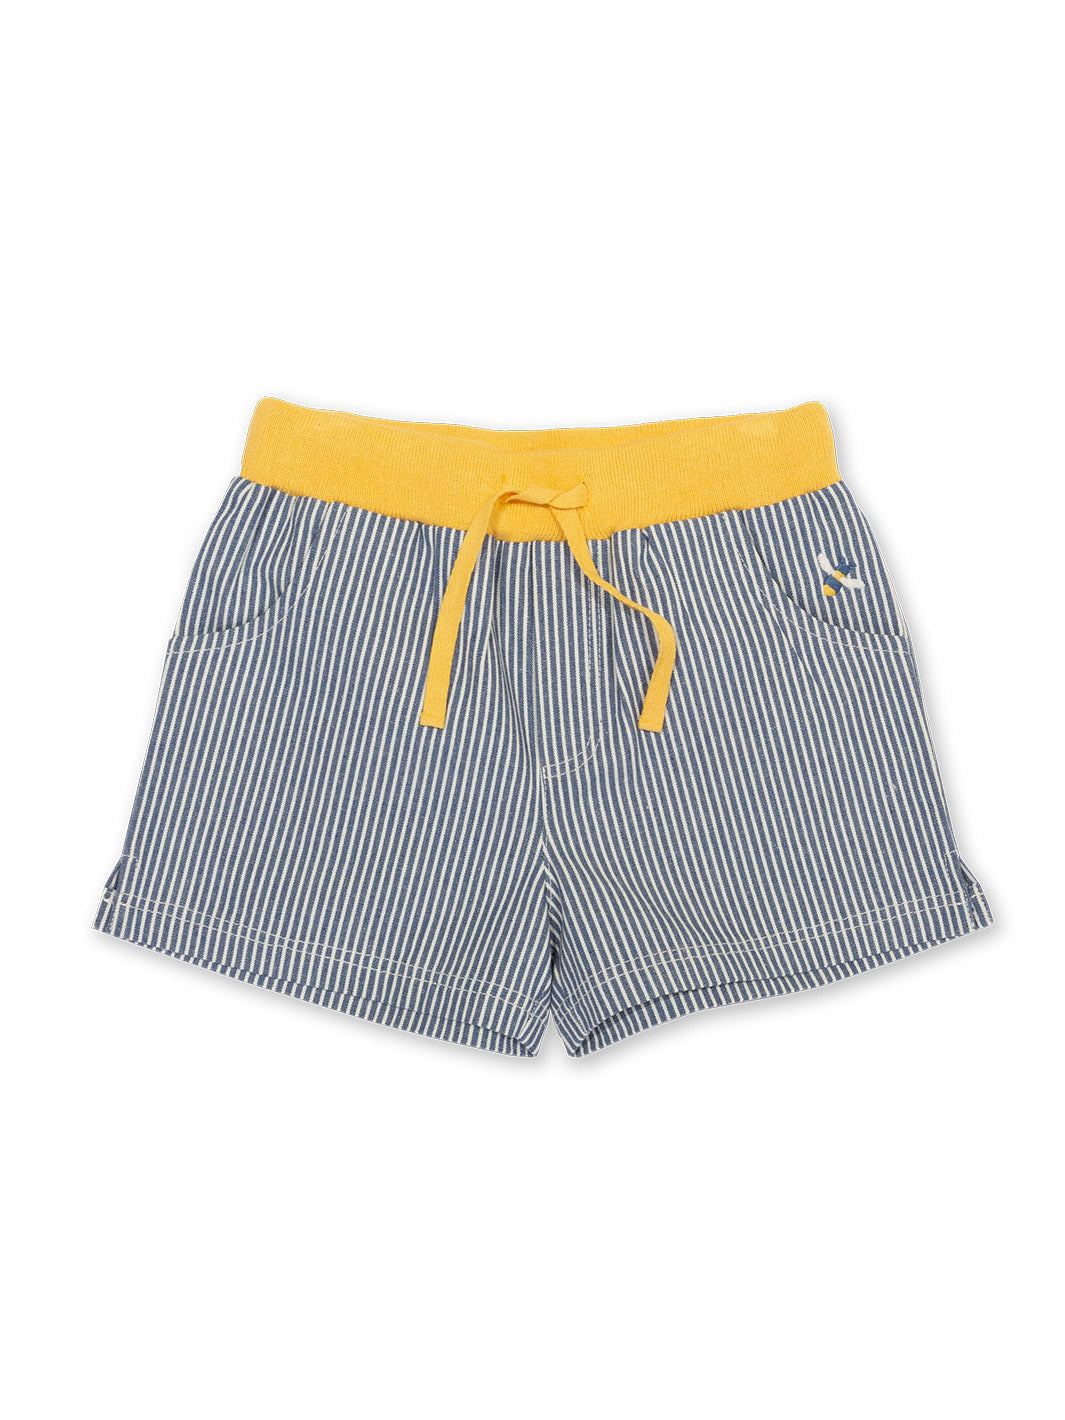 Kite Bumble Shorts - Navy